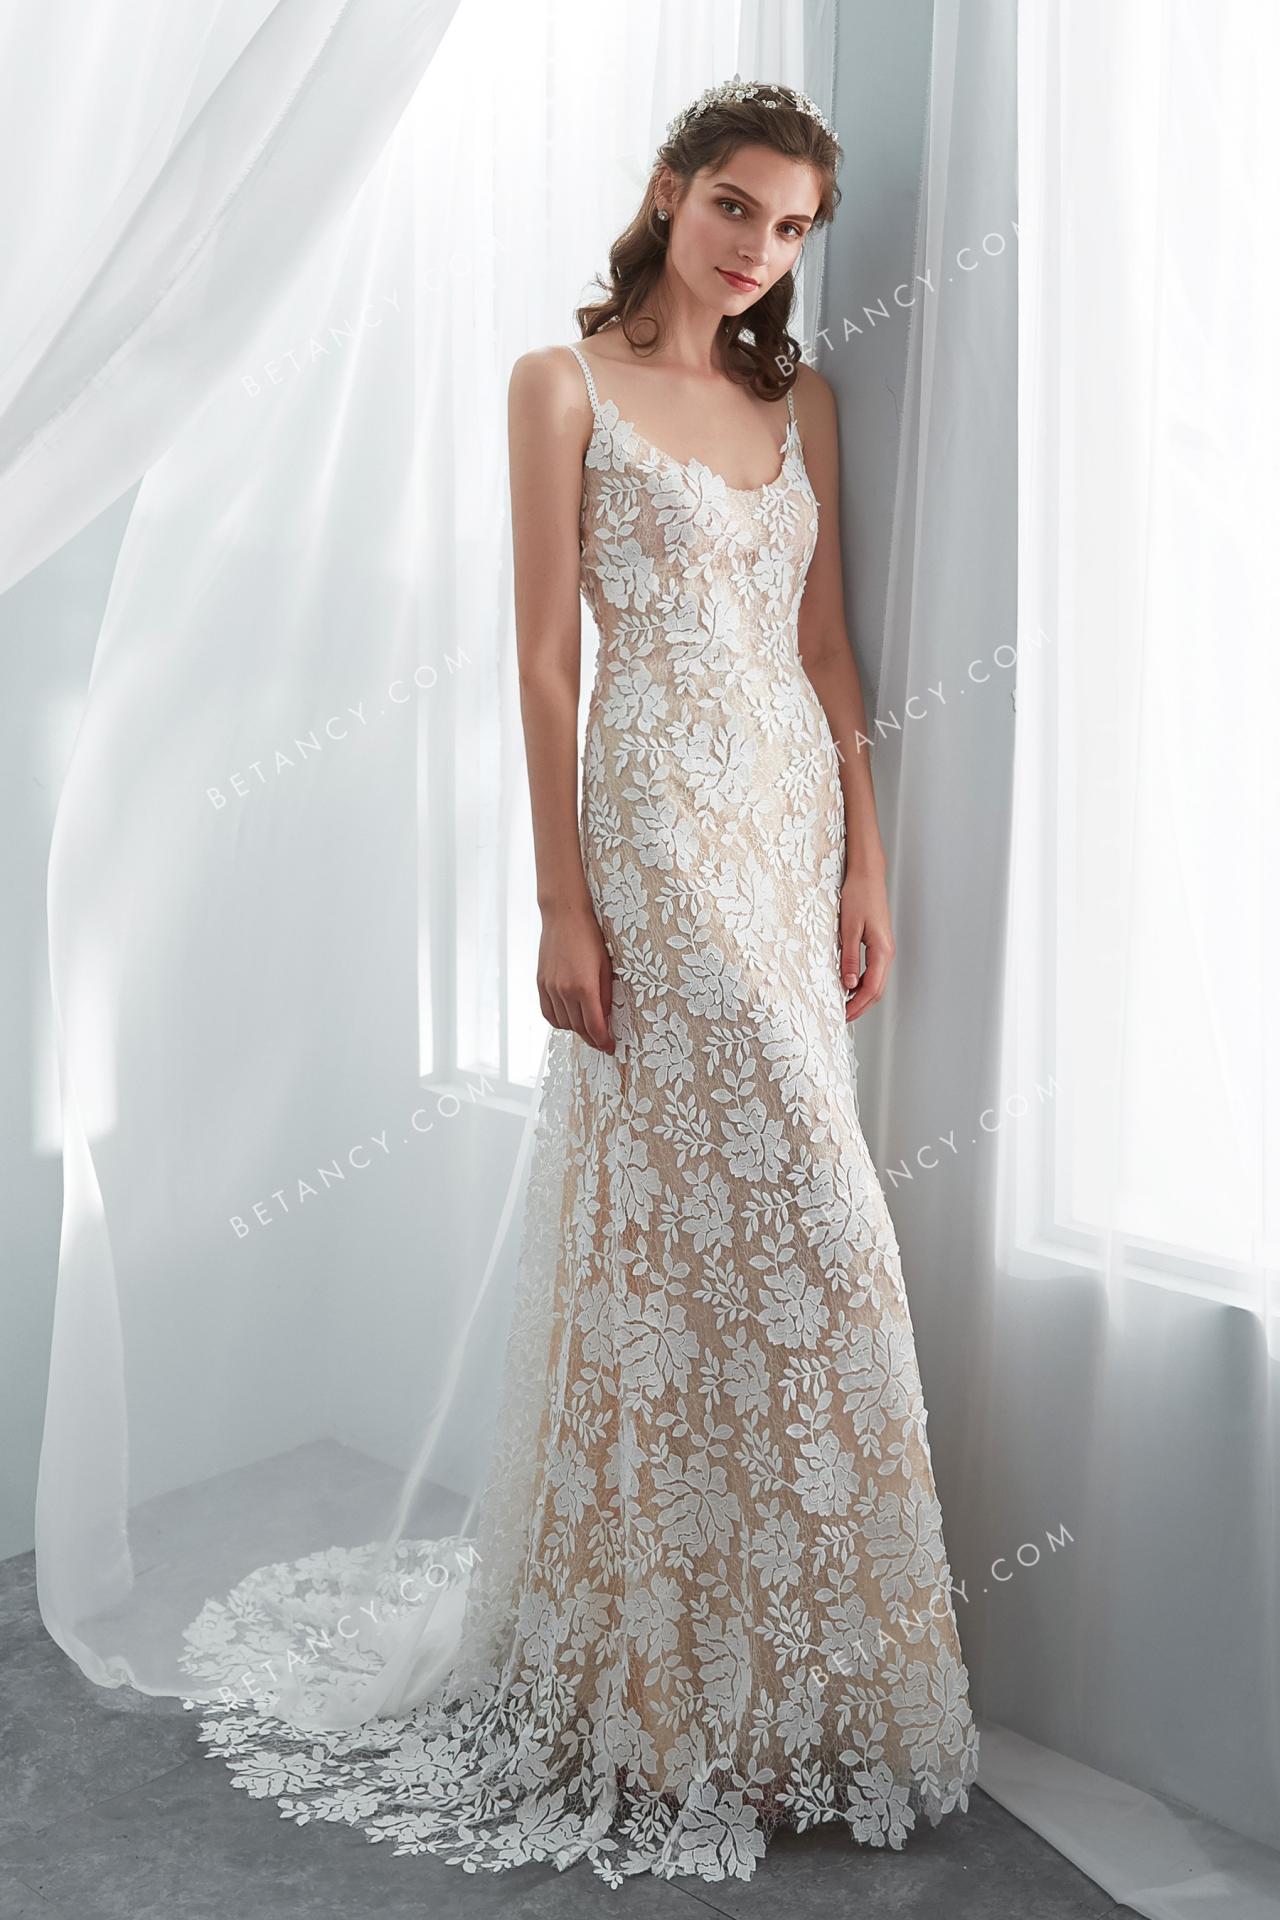 Breathtaking champagne long bohemian designer wholesale wedding gown 2